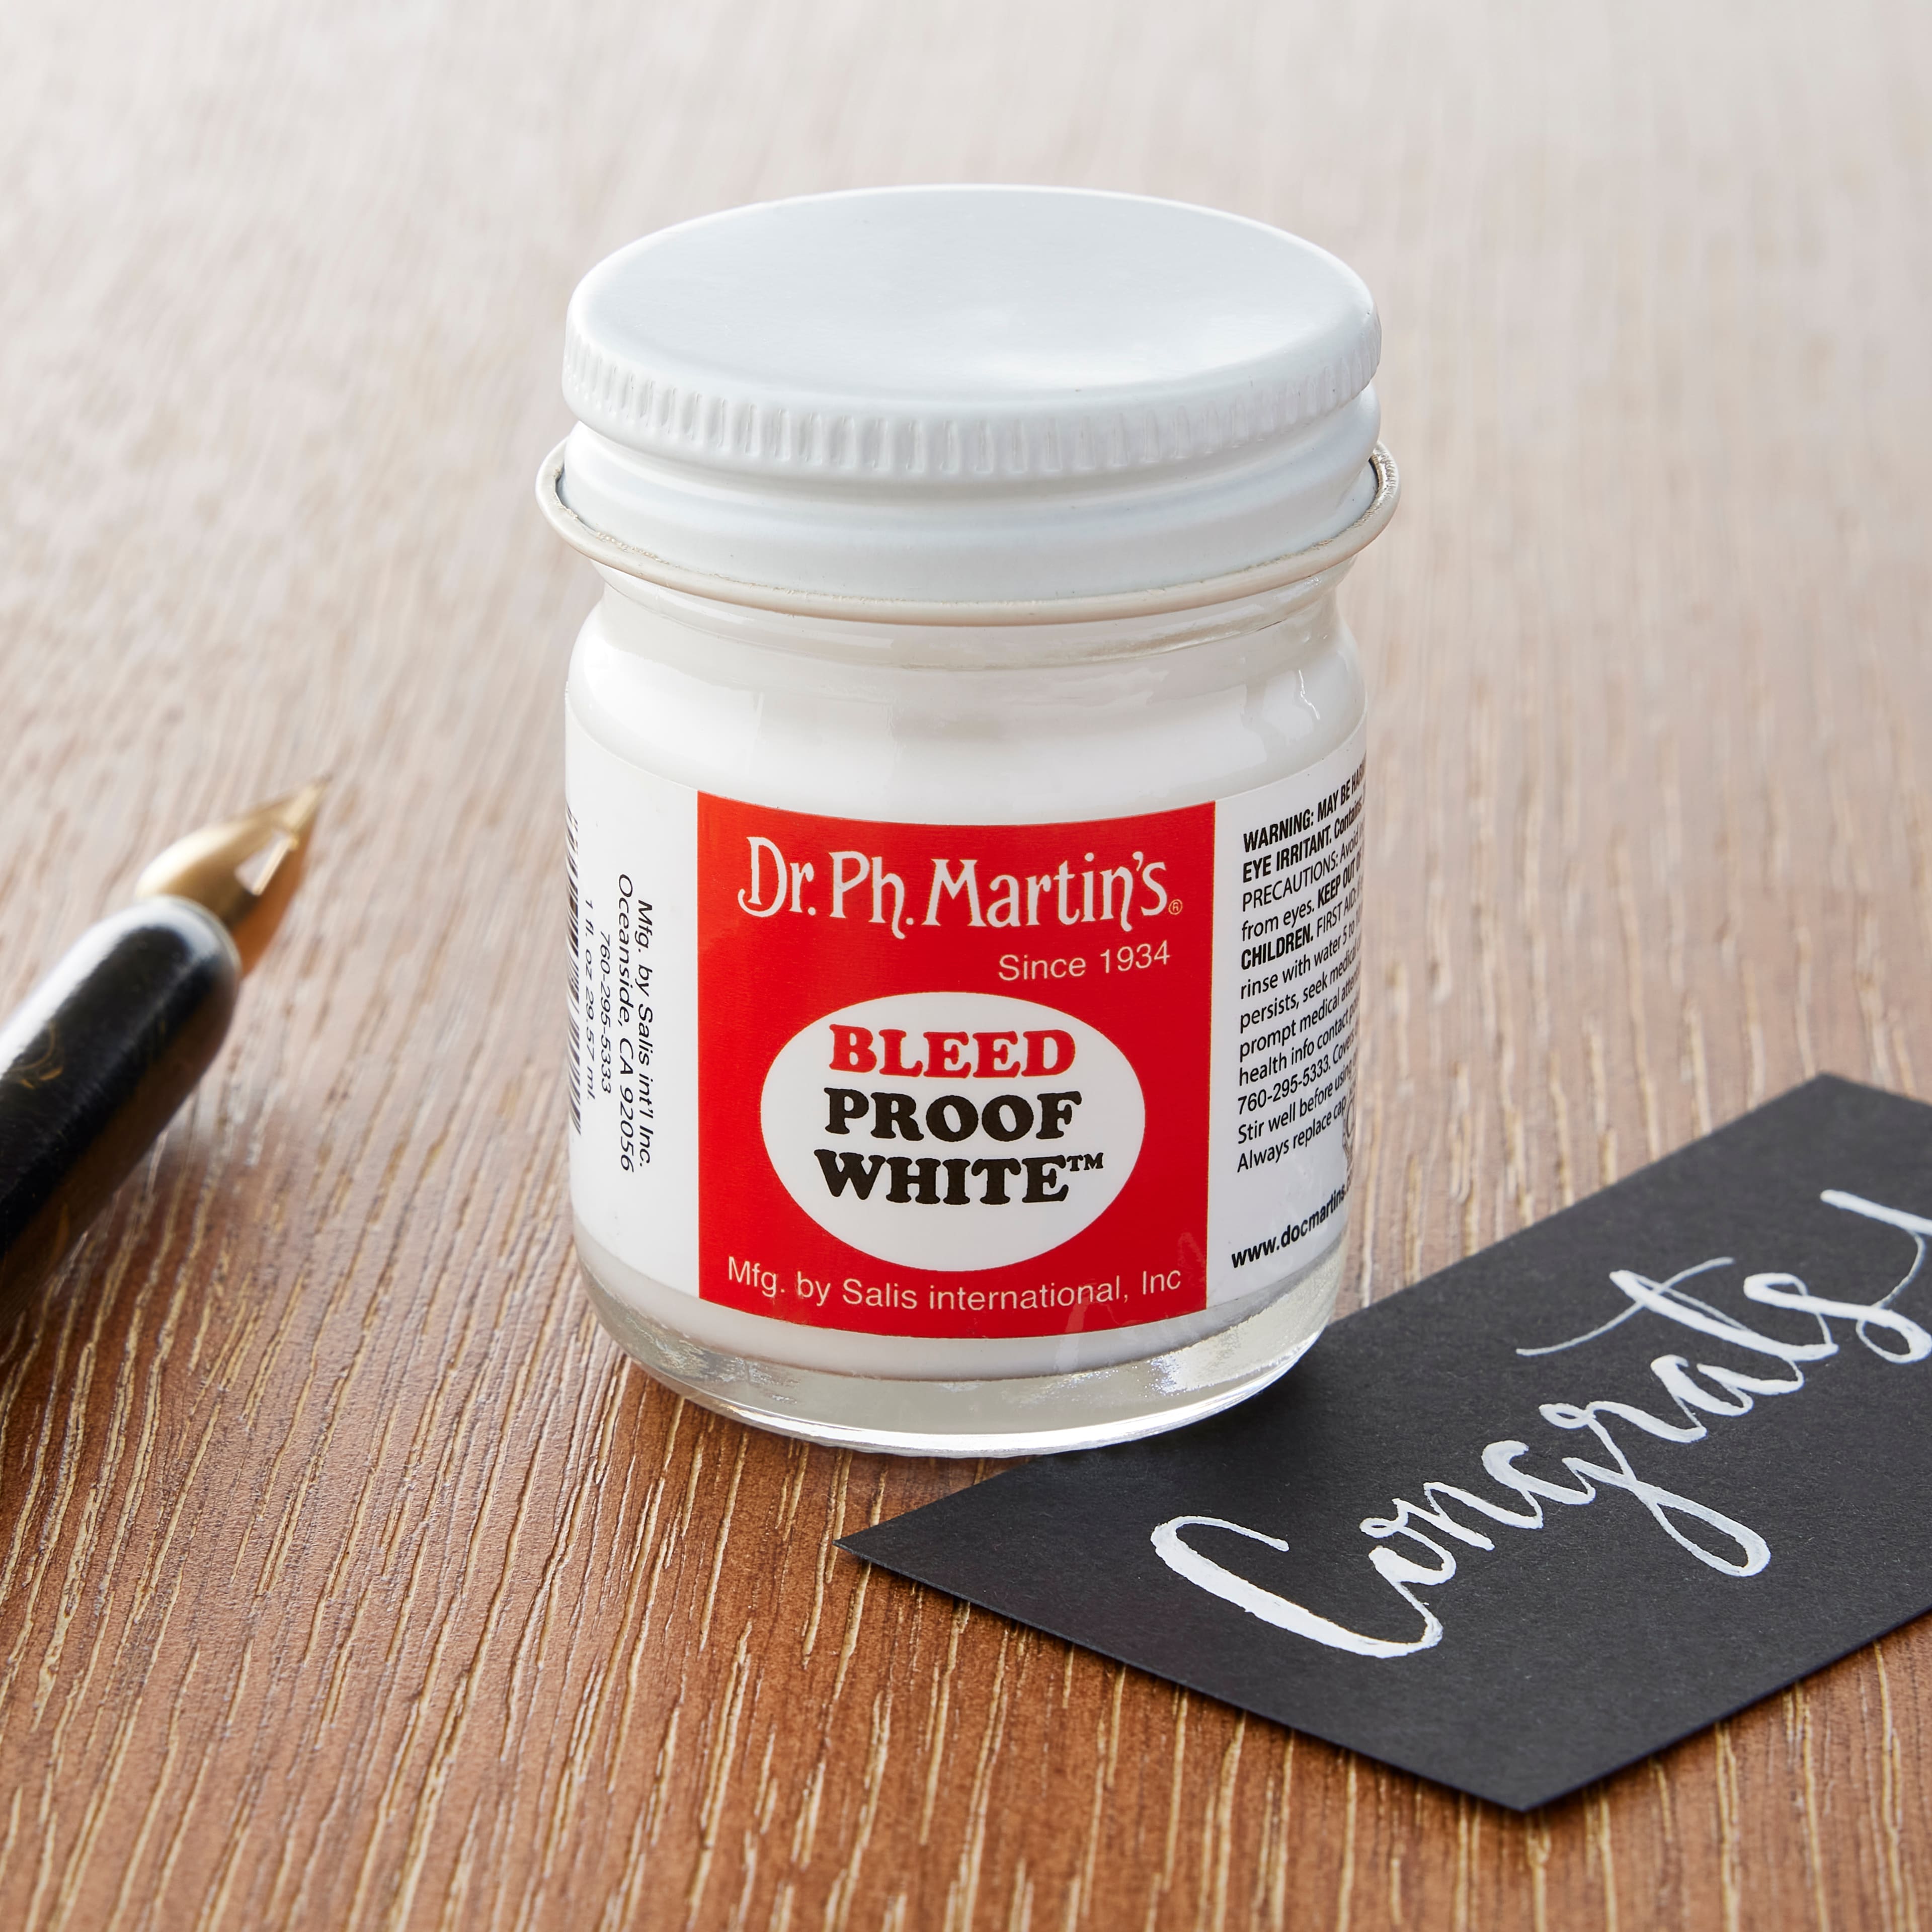 My Favorite Tool: Dr. Ph. Martin's Bleedproof White™